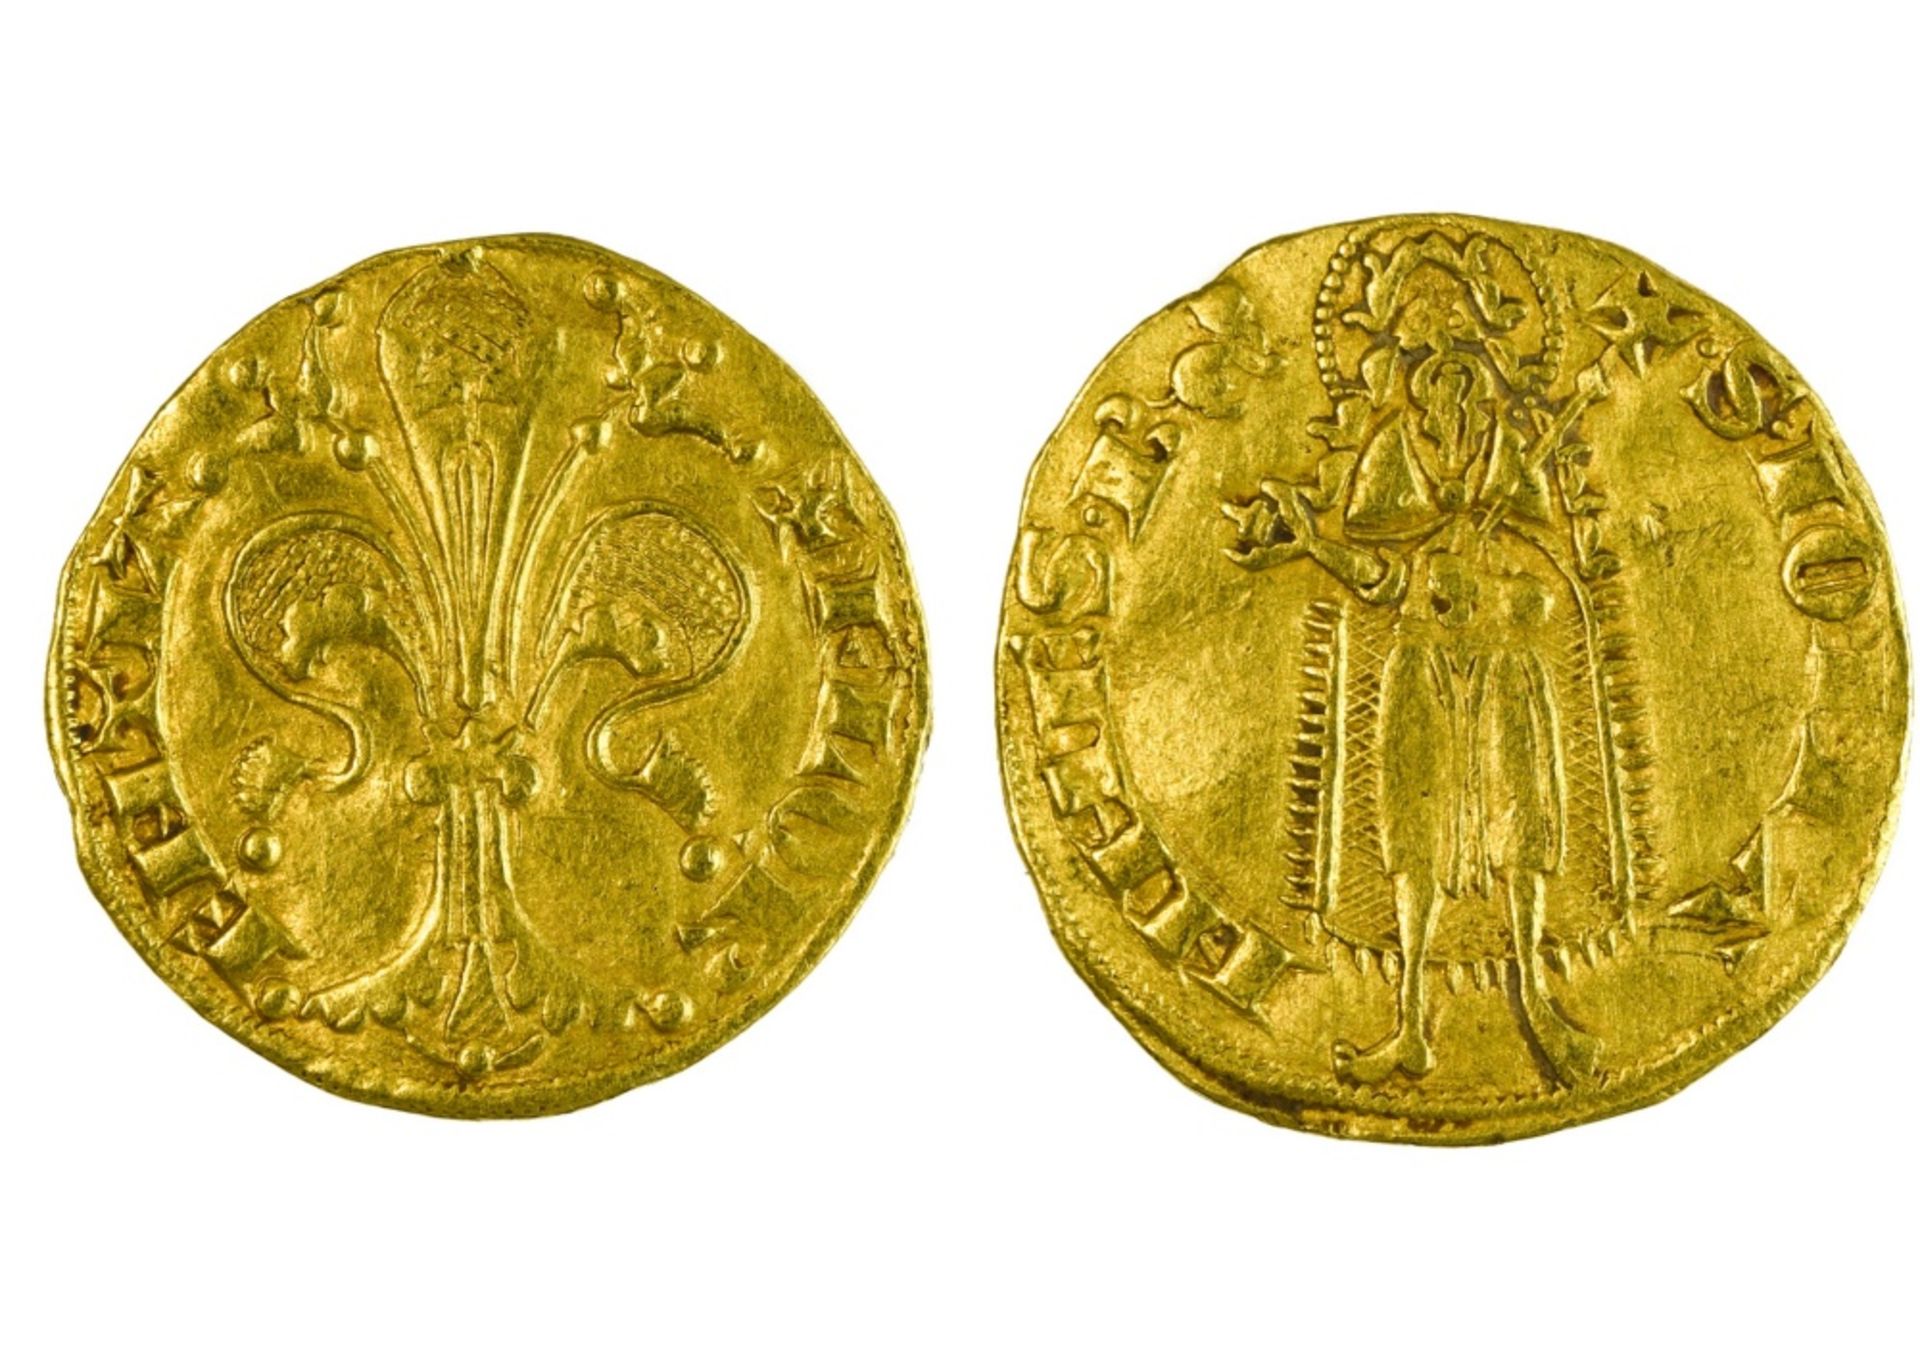 Italy, Firenze Republic (1189-1531), Florin, 3.35g, Florentine lys, +FLOR. ENTIA., rev. Saint John